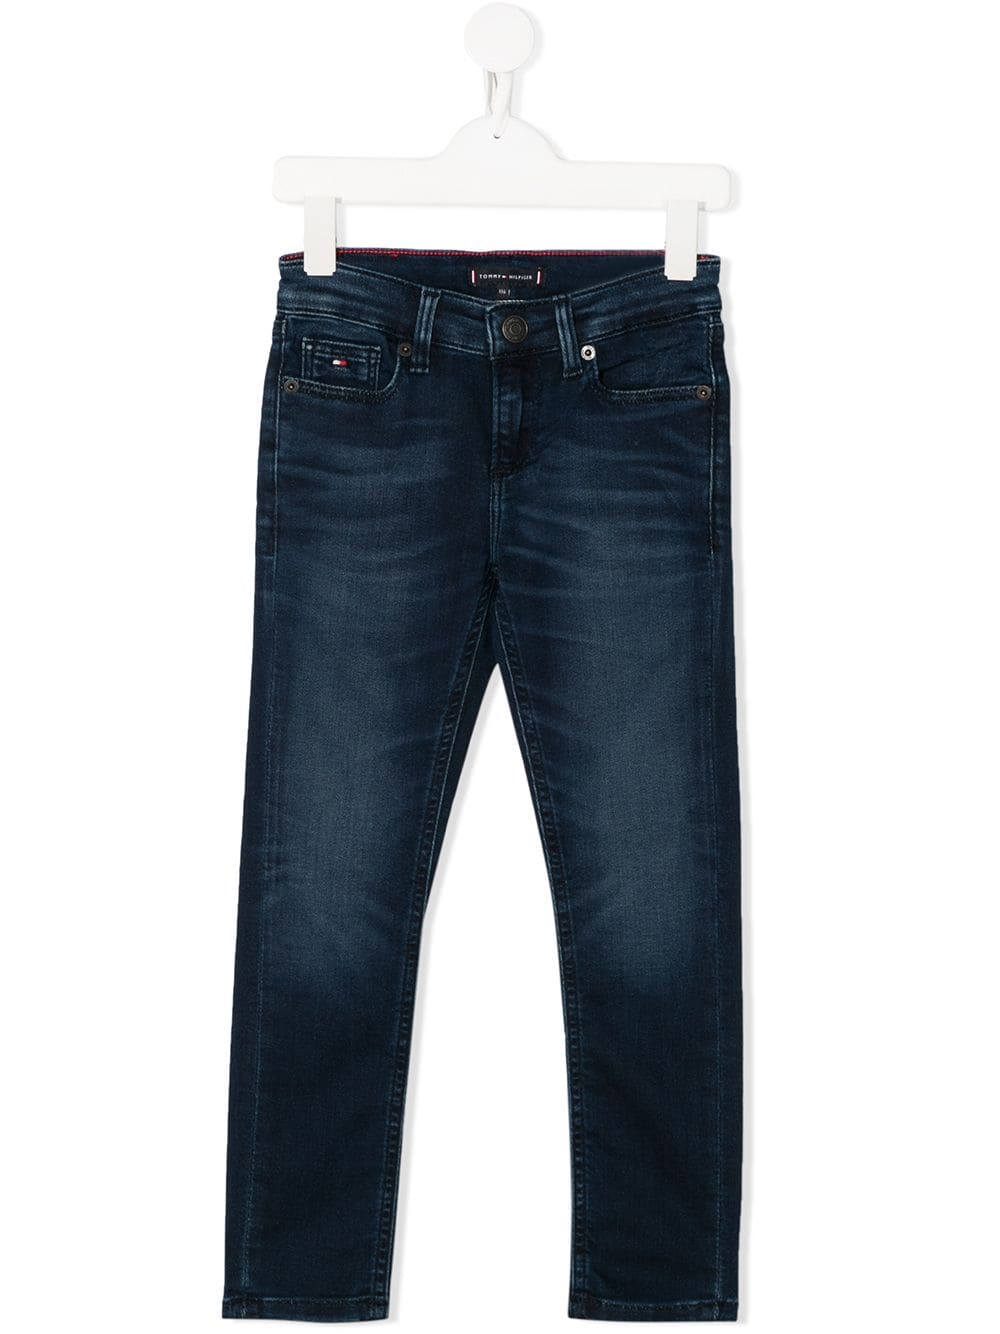 Tommy Hilfiger - scanton jeans - boys - dstore online